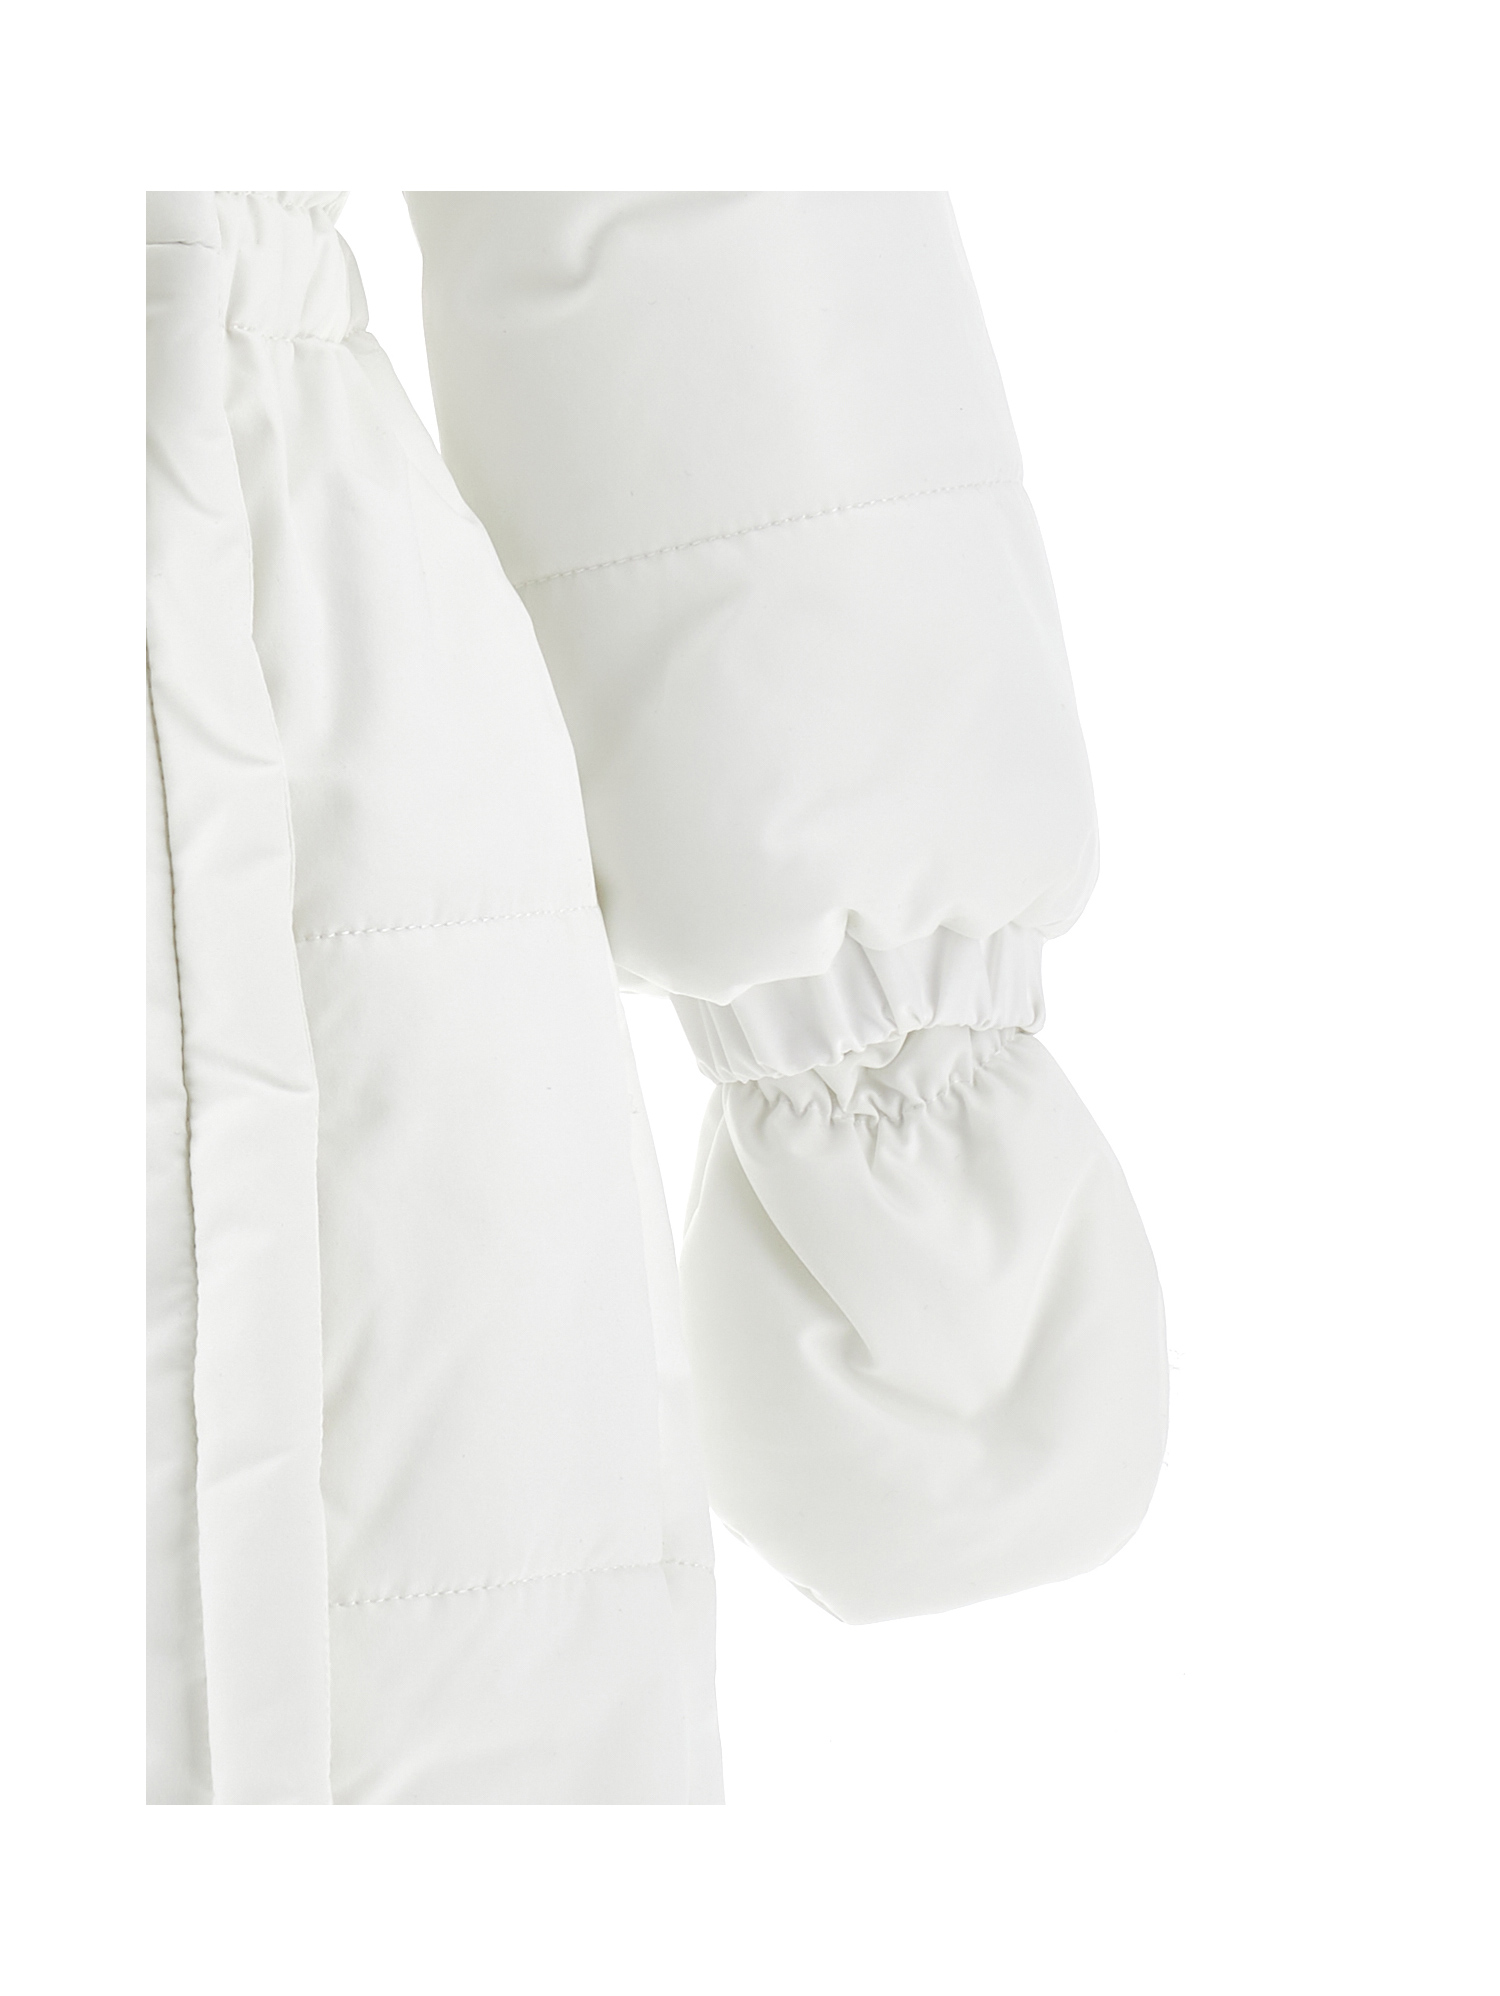 Shop Monnalisa Full Nylon Snowsuit In Cream